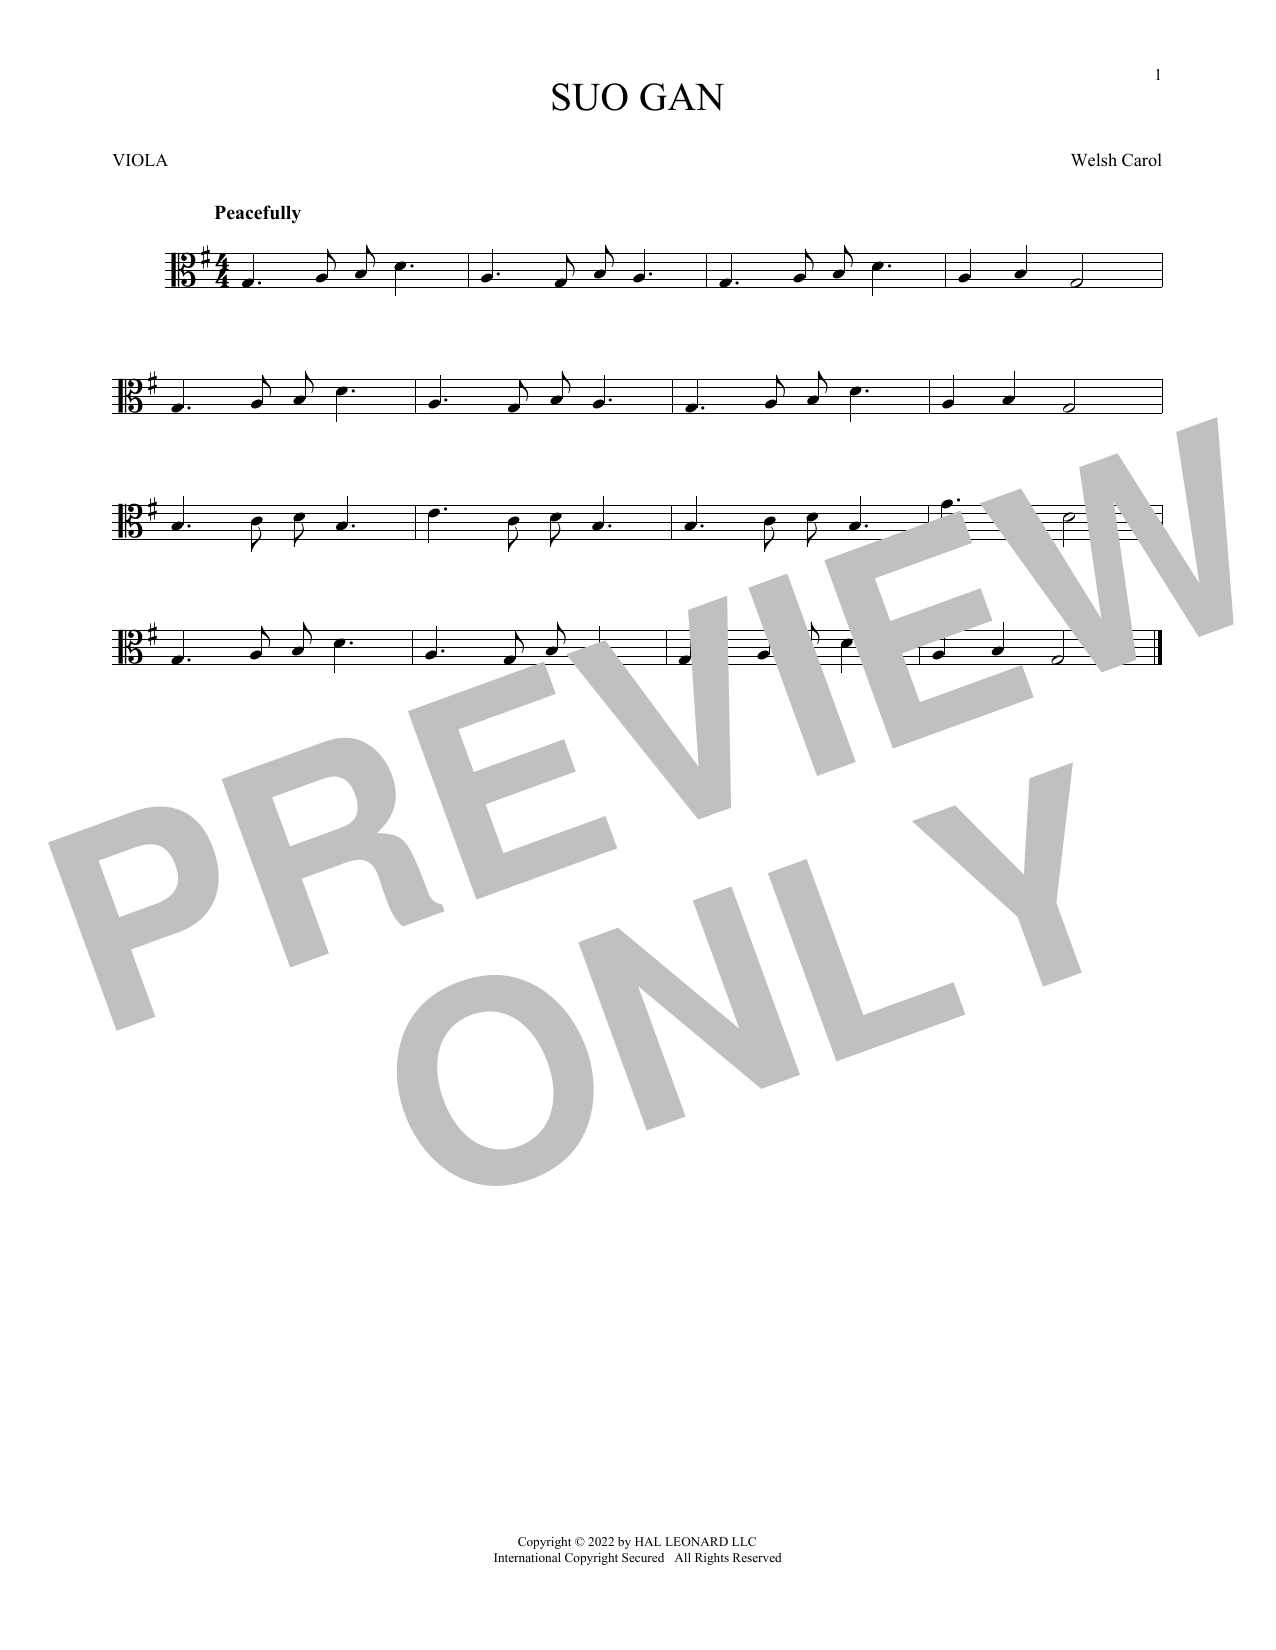 Welsh carol Suo Gan Sheet Music Notes & Chords for Viola Solo - Download or Print PDF